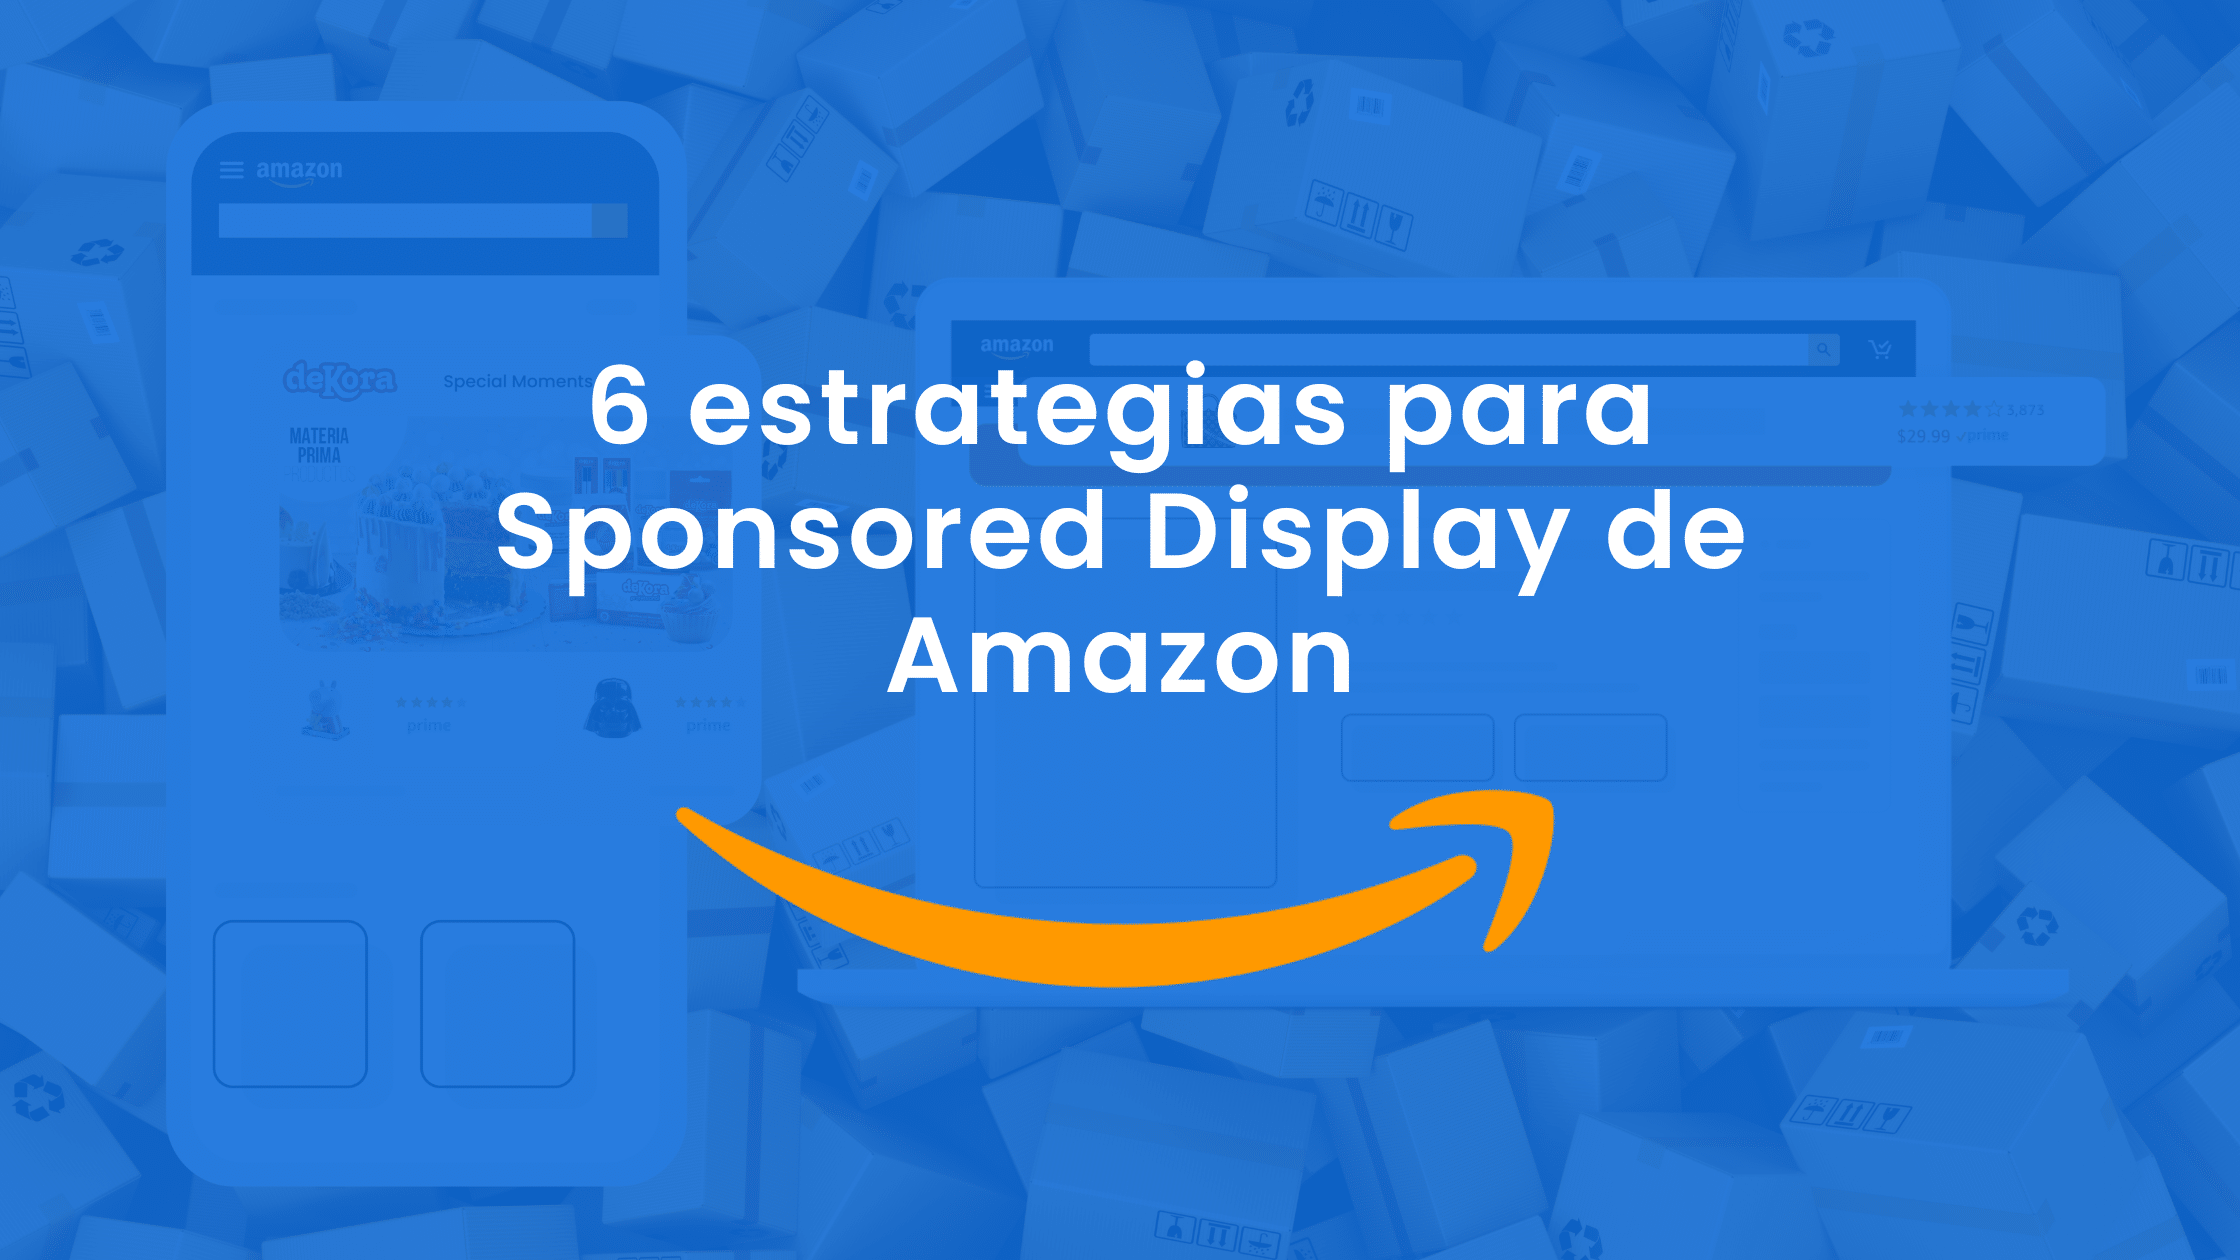 6 estrategias para sponsored Display Amazon